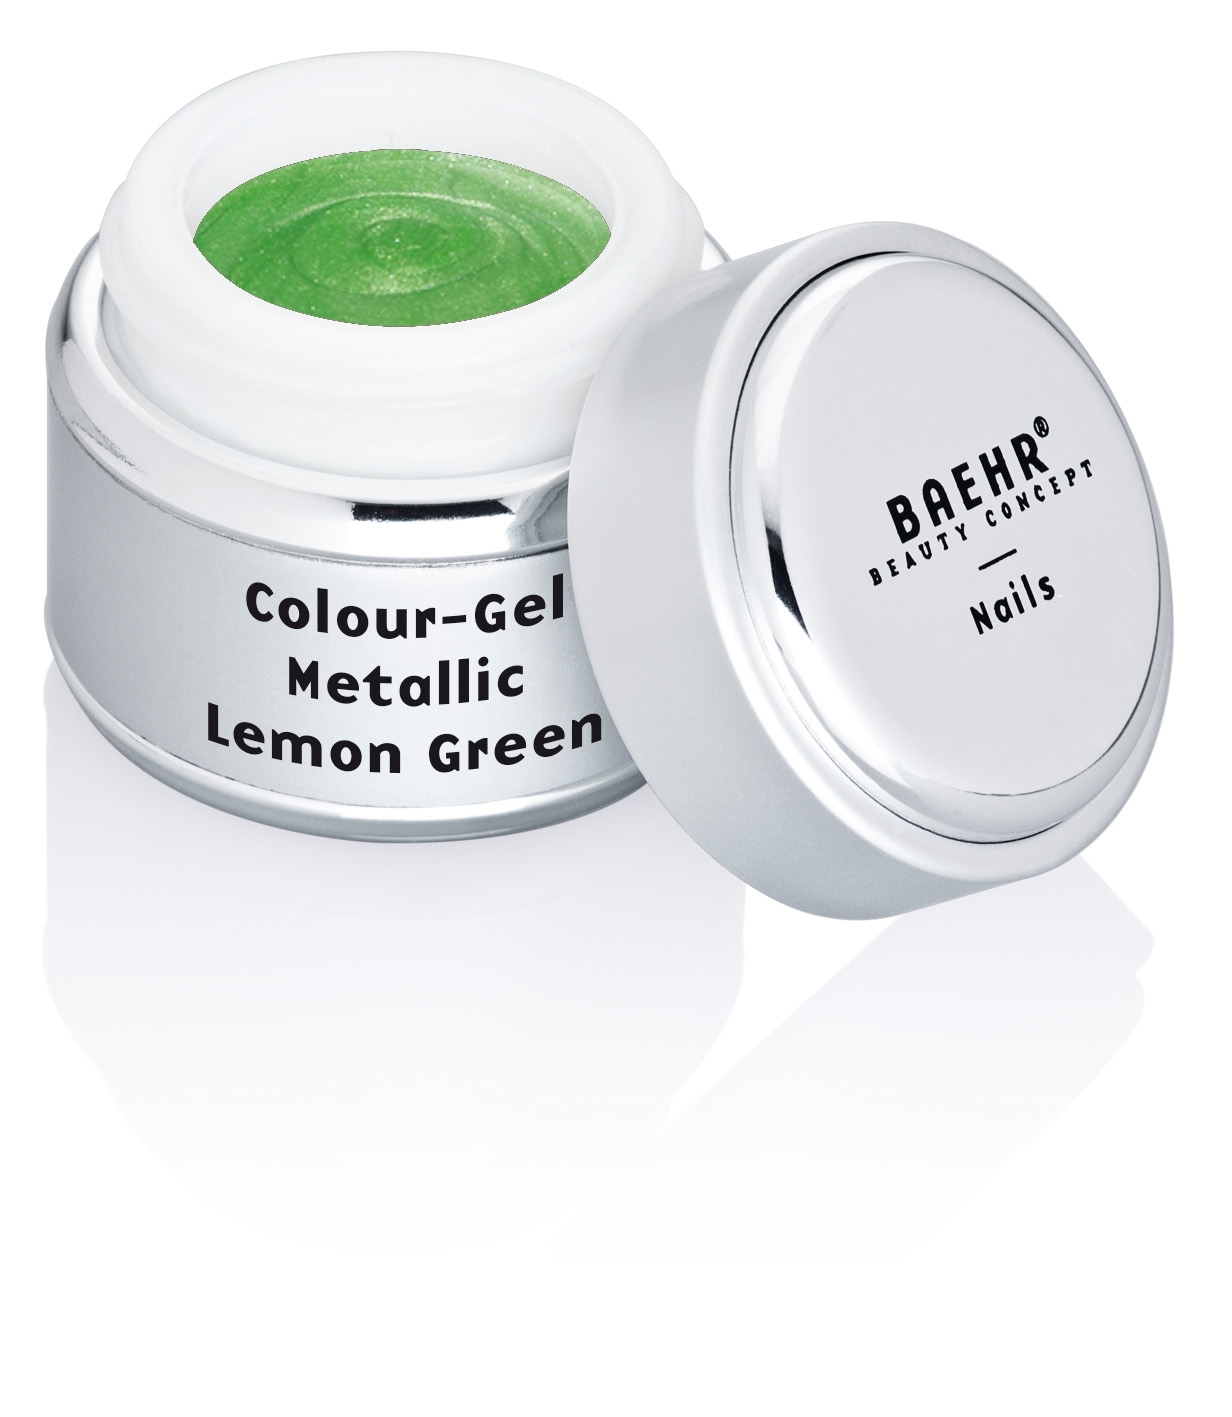 BAEHR BEAUTY CONCEPT NAILS Colour-Gel Metallic Lemon Green 5 ml